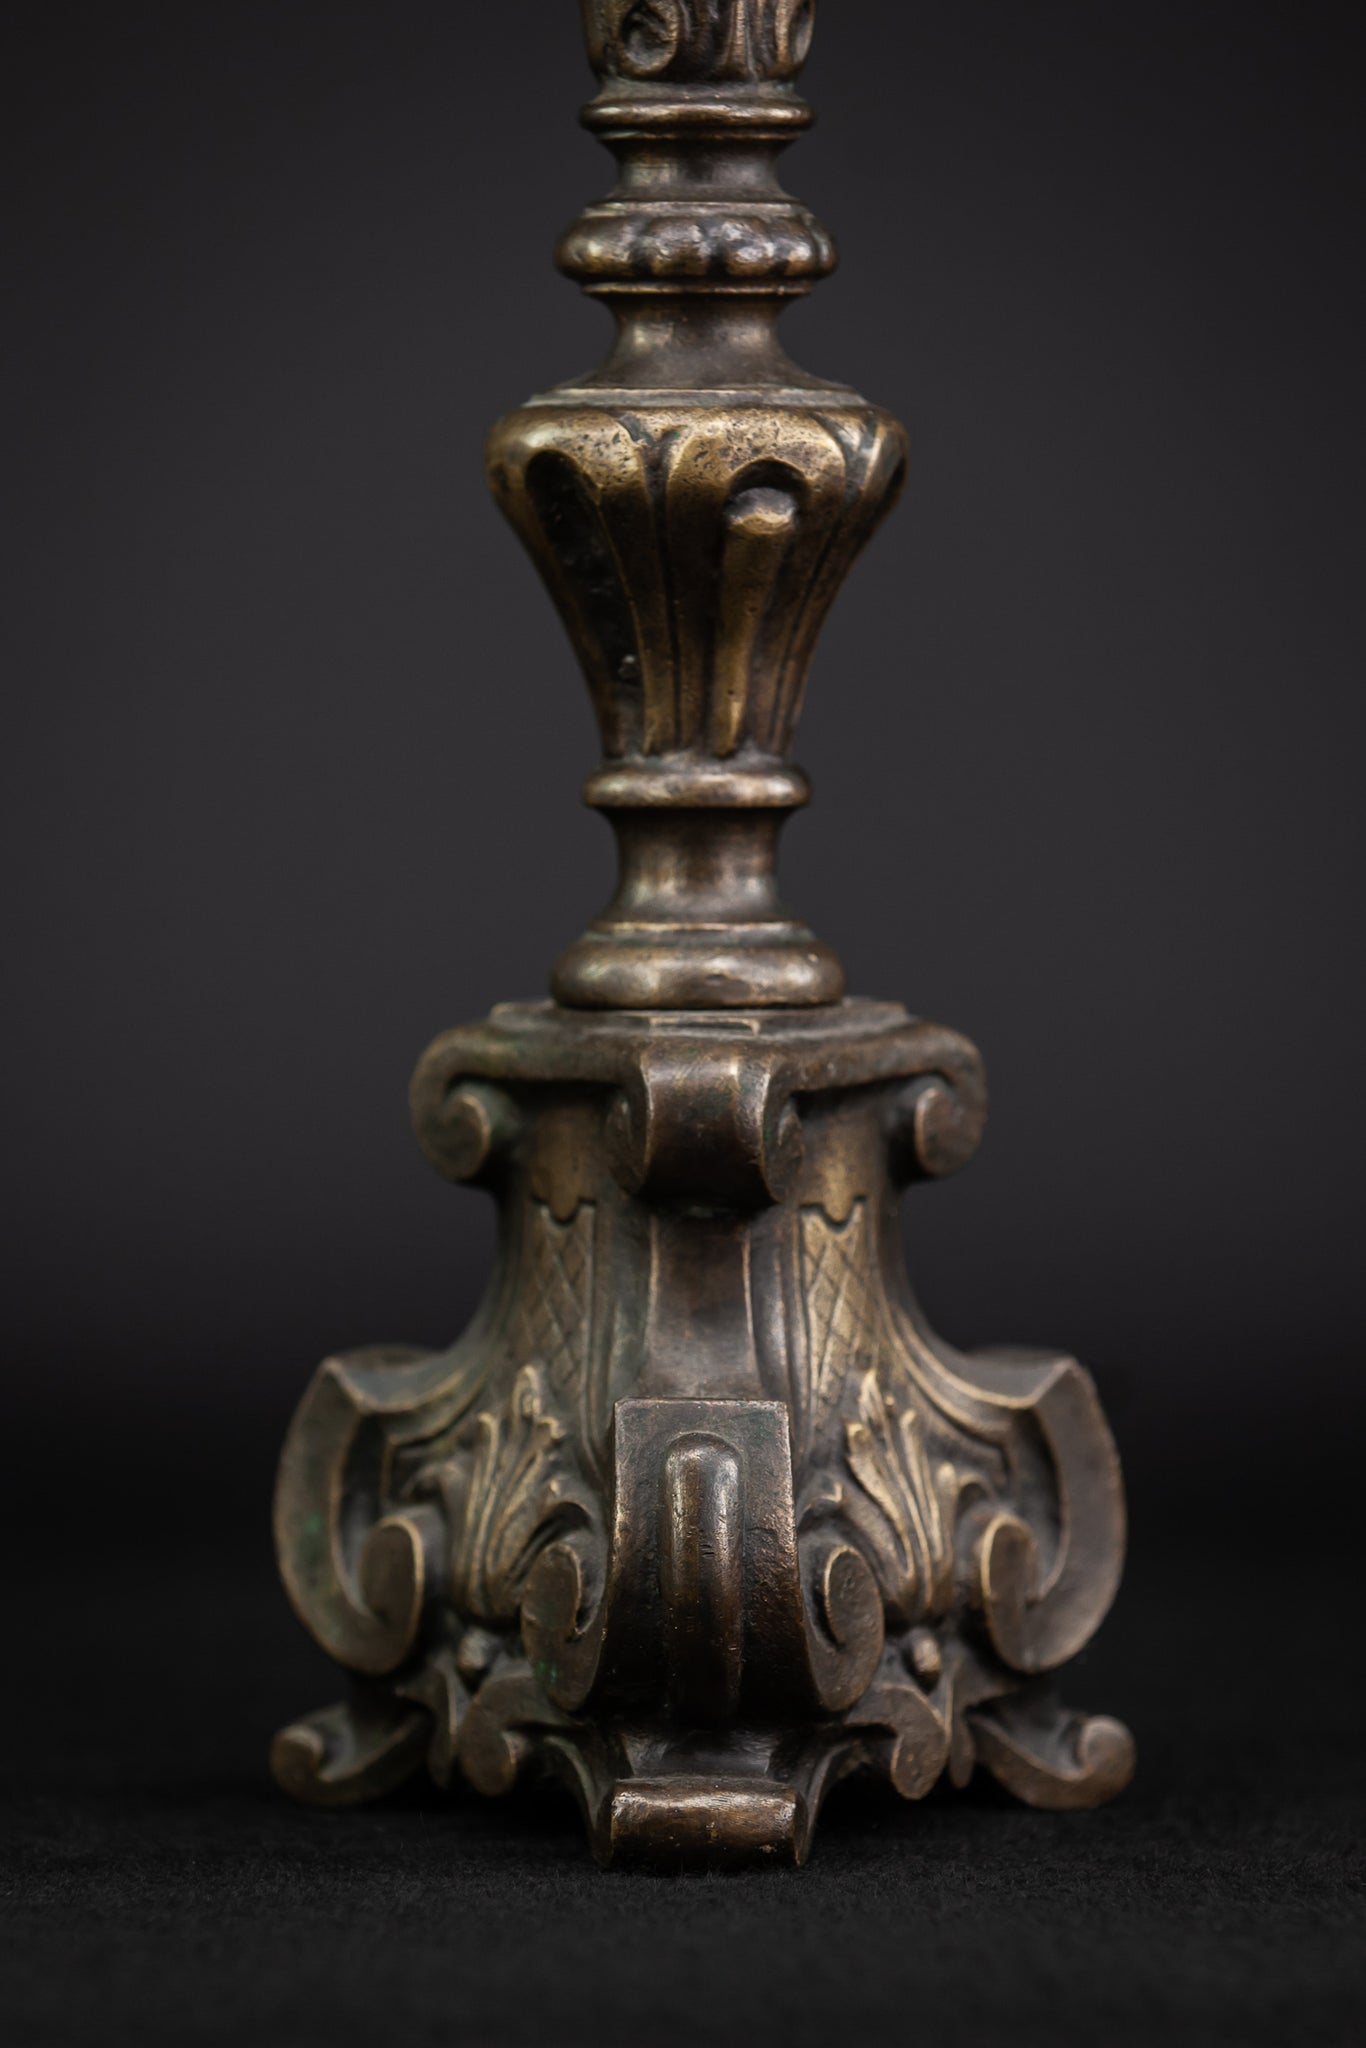 Set of Three Baroque Pricket Bronze Candlesticks | 16"